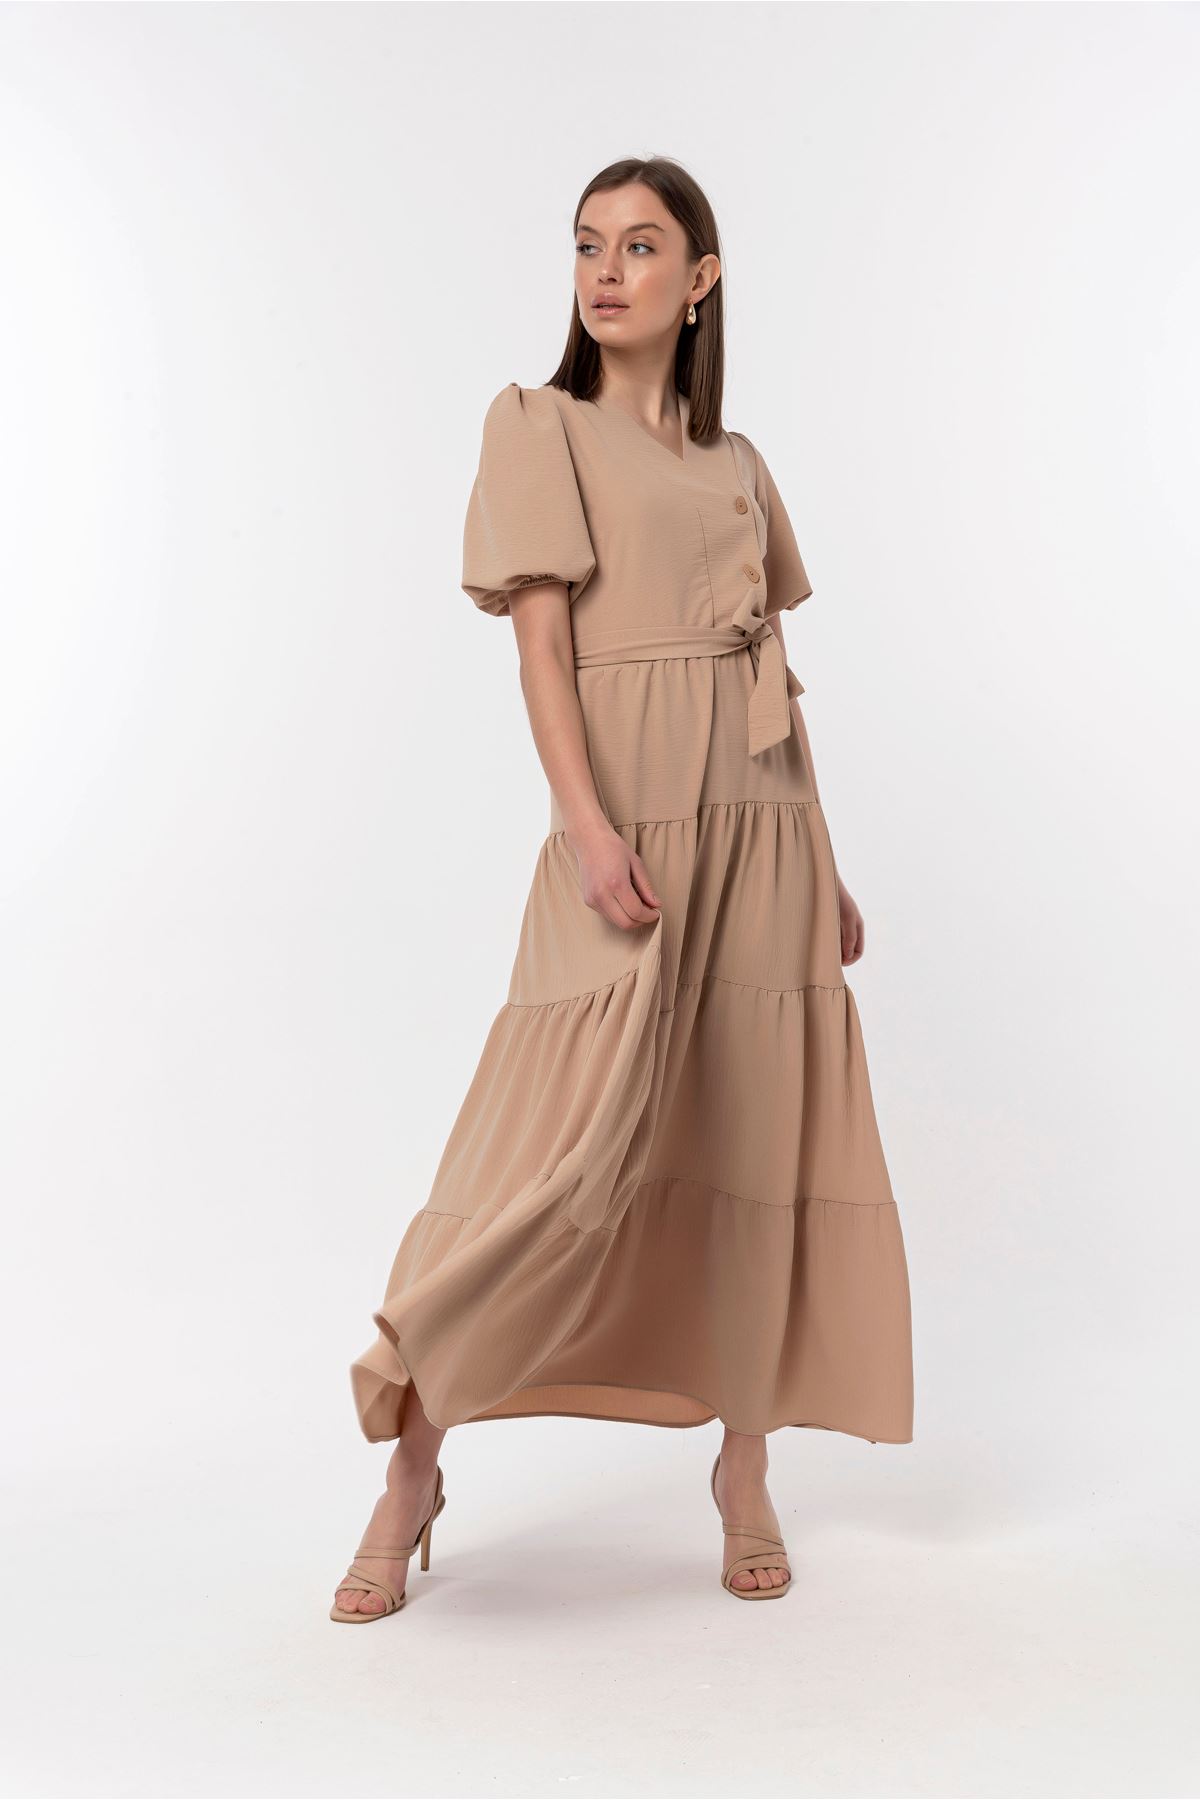 Aerobin Fabric Short Sleeve V-Neck Long Loose Fit Women Dress - Beige 